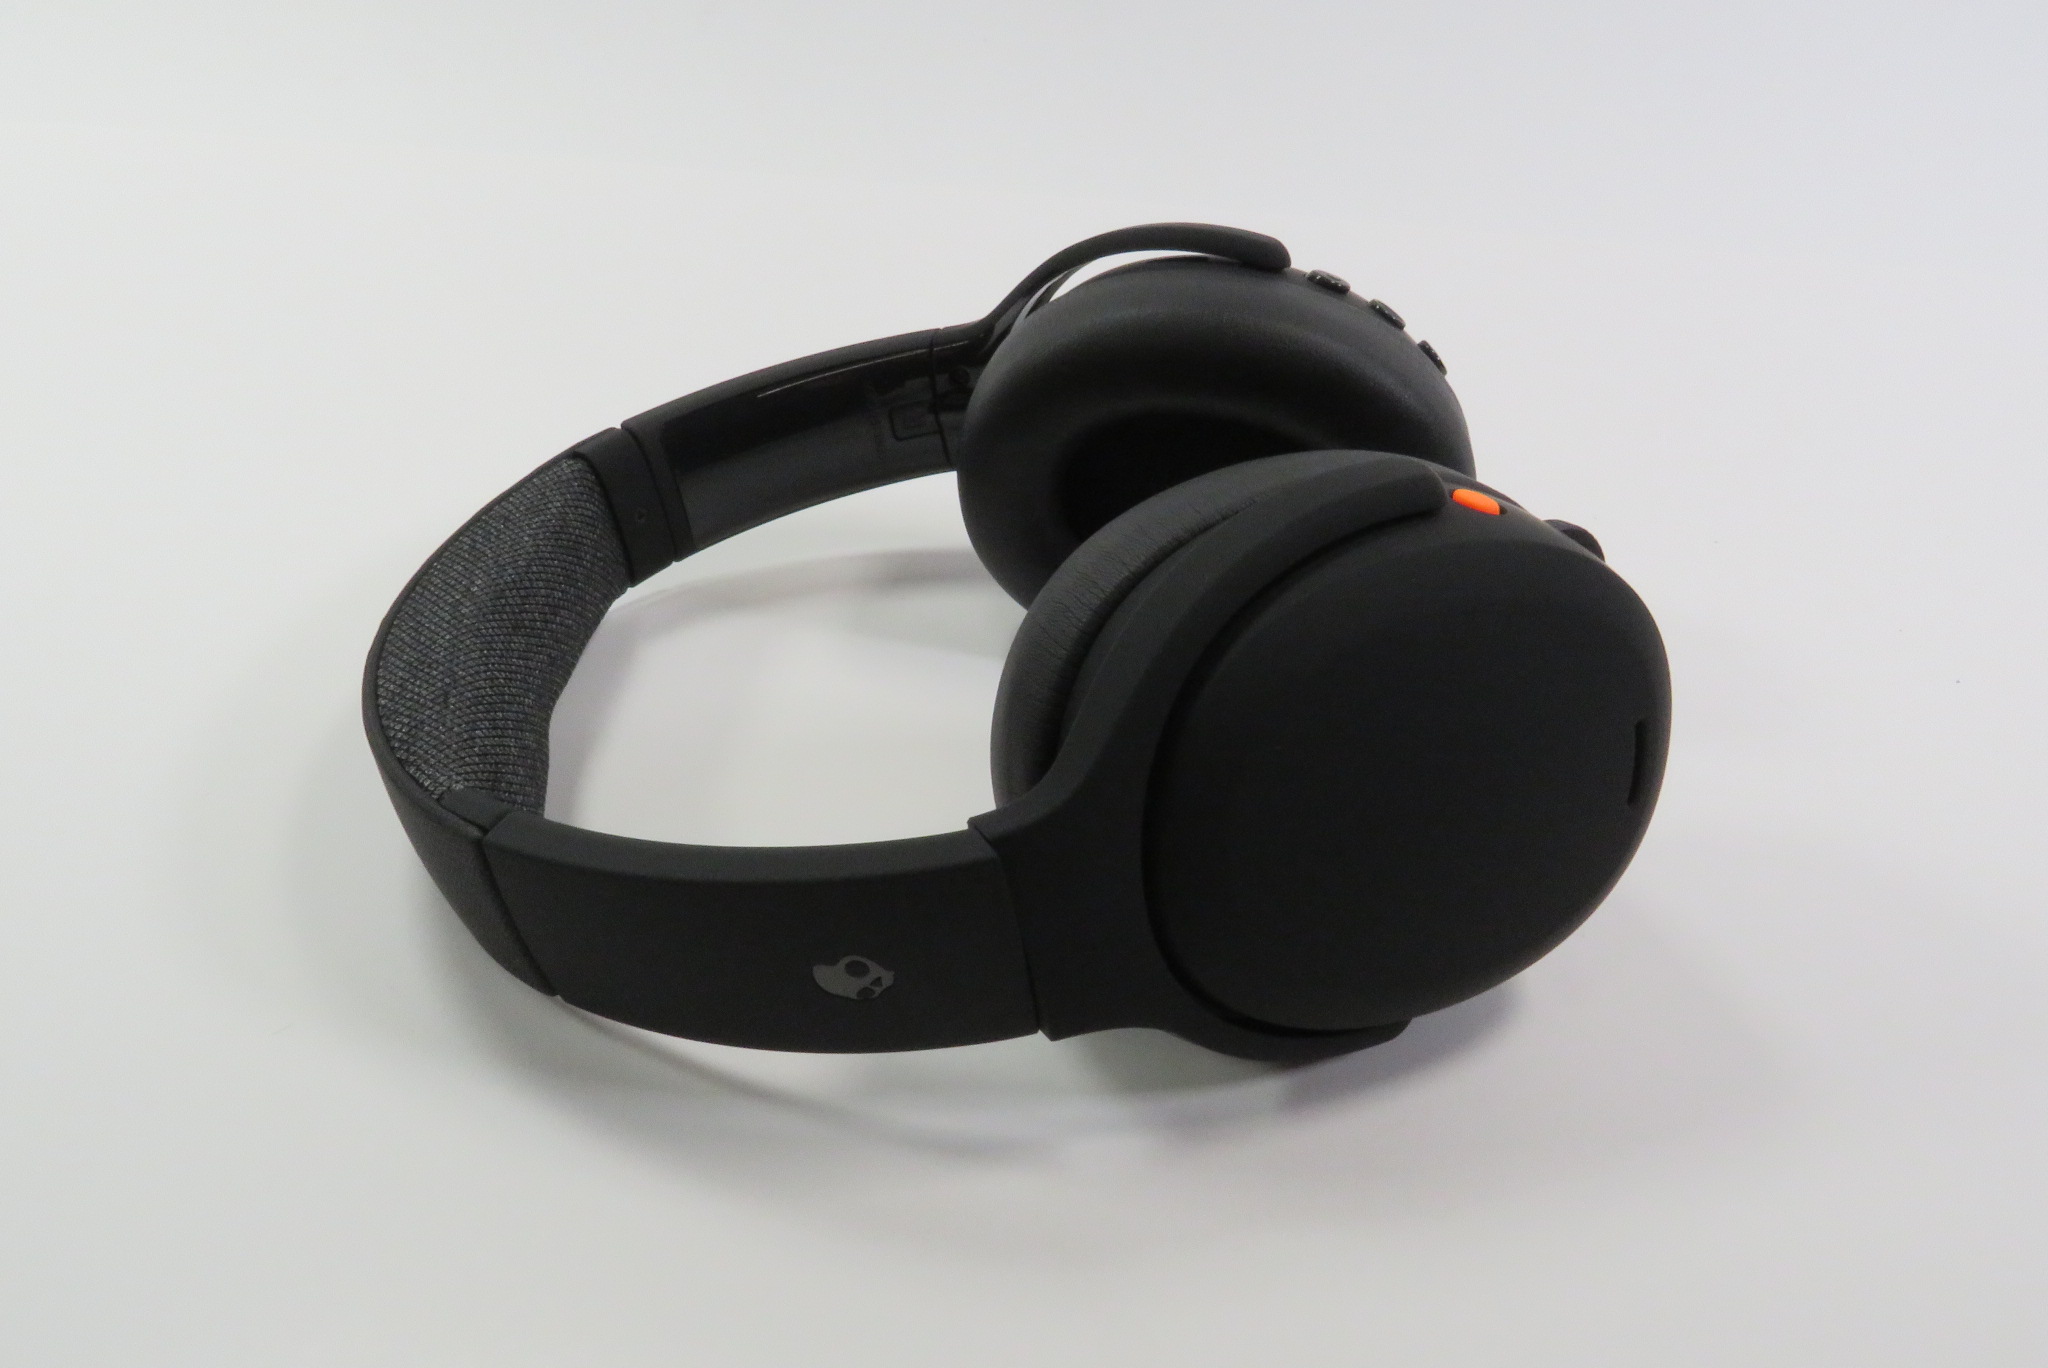 Skullcandy Crusher Over-ear Bluetooth Wireless Headphones : Target